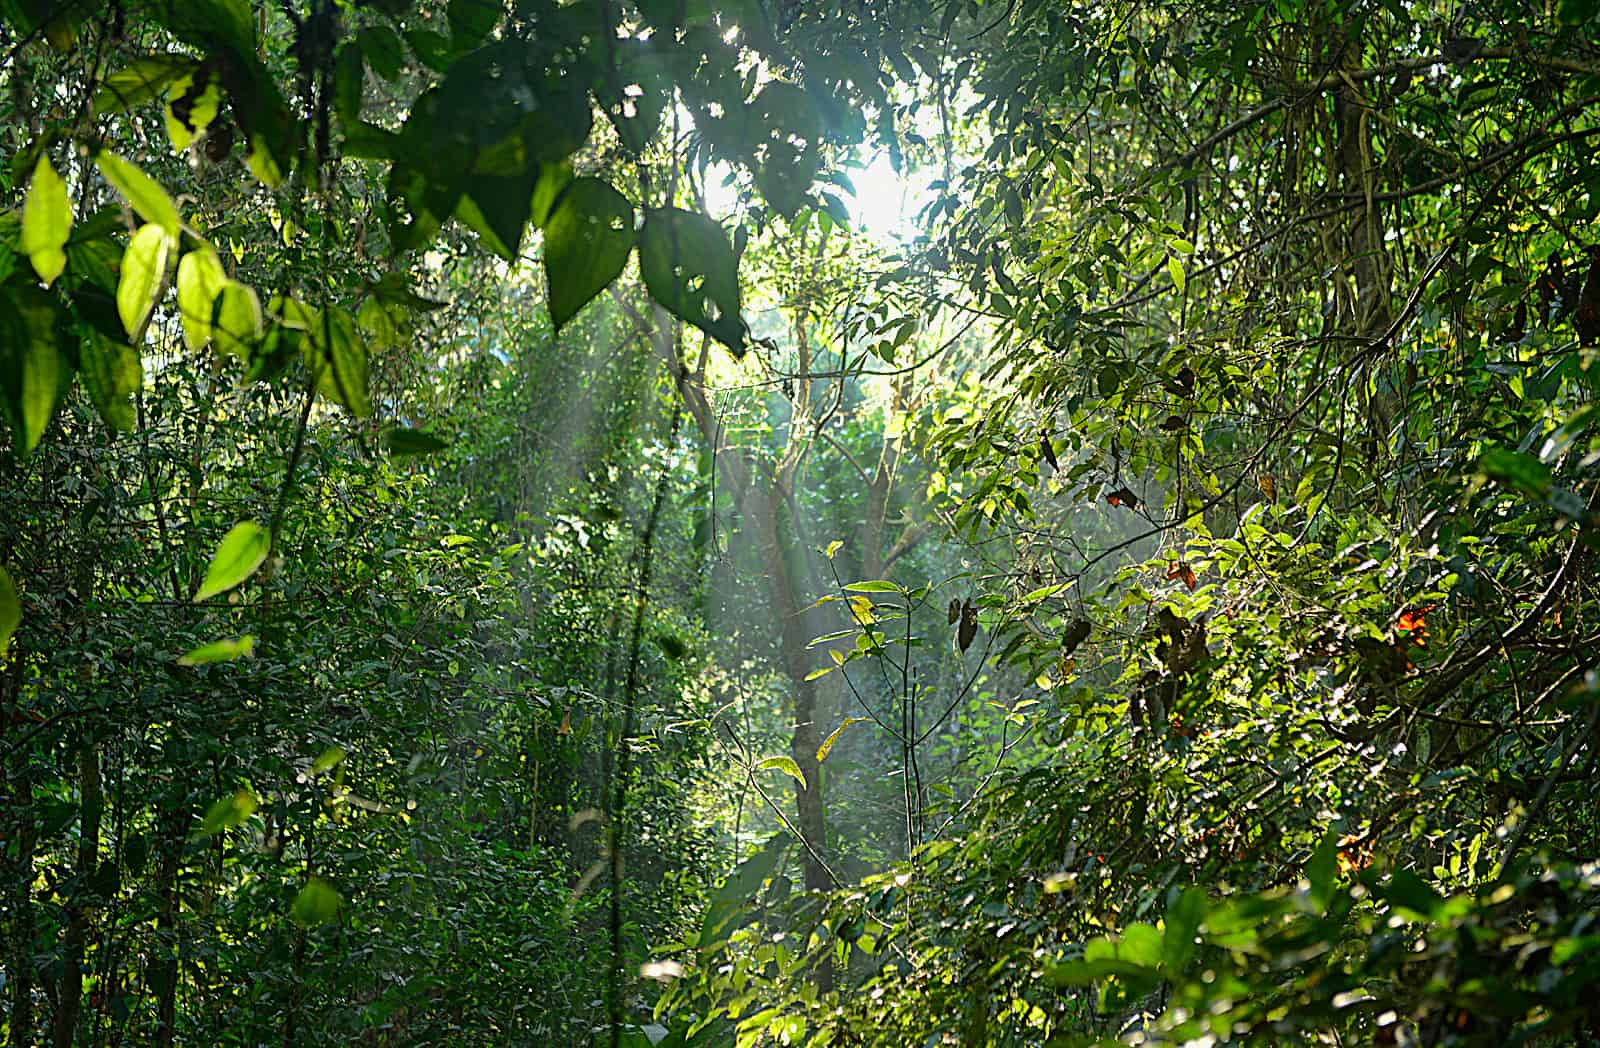 Corcovado National Park Costa Rica